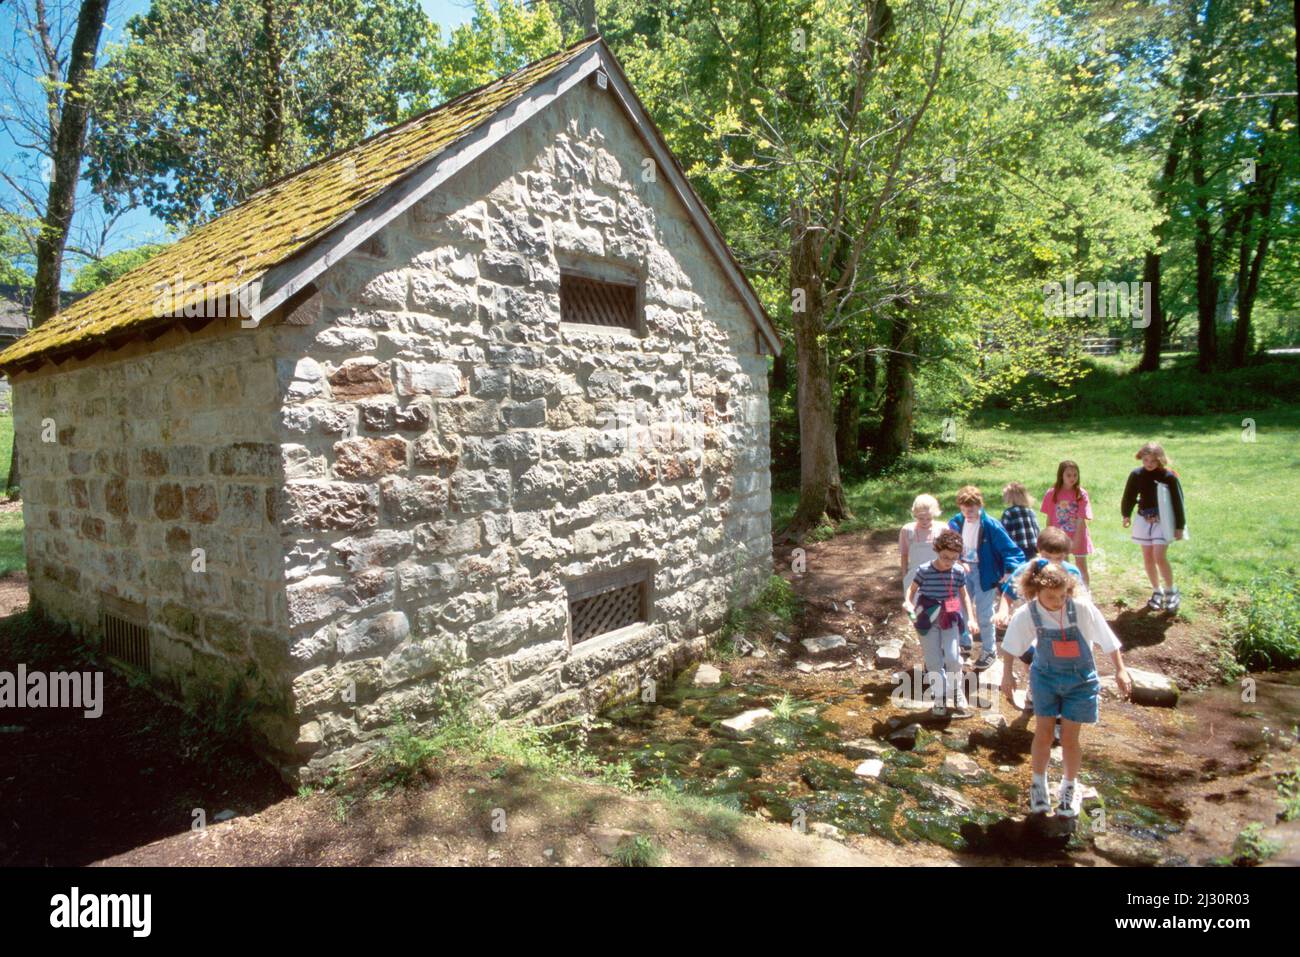 Nashville Tennessee The Hermitage,1836 US-Präsident Andrew Jackson Gehöft Studenten Kalkstein springhouse,Klasse Exkursion Besucher Stockfoto